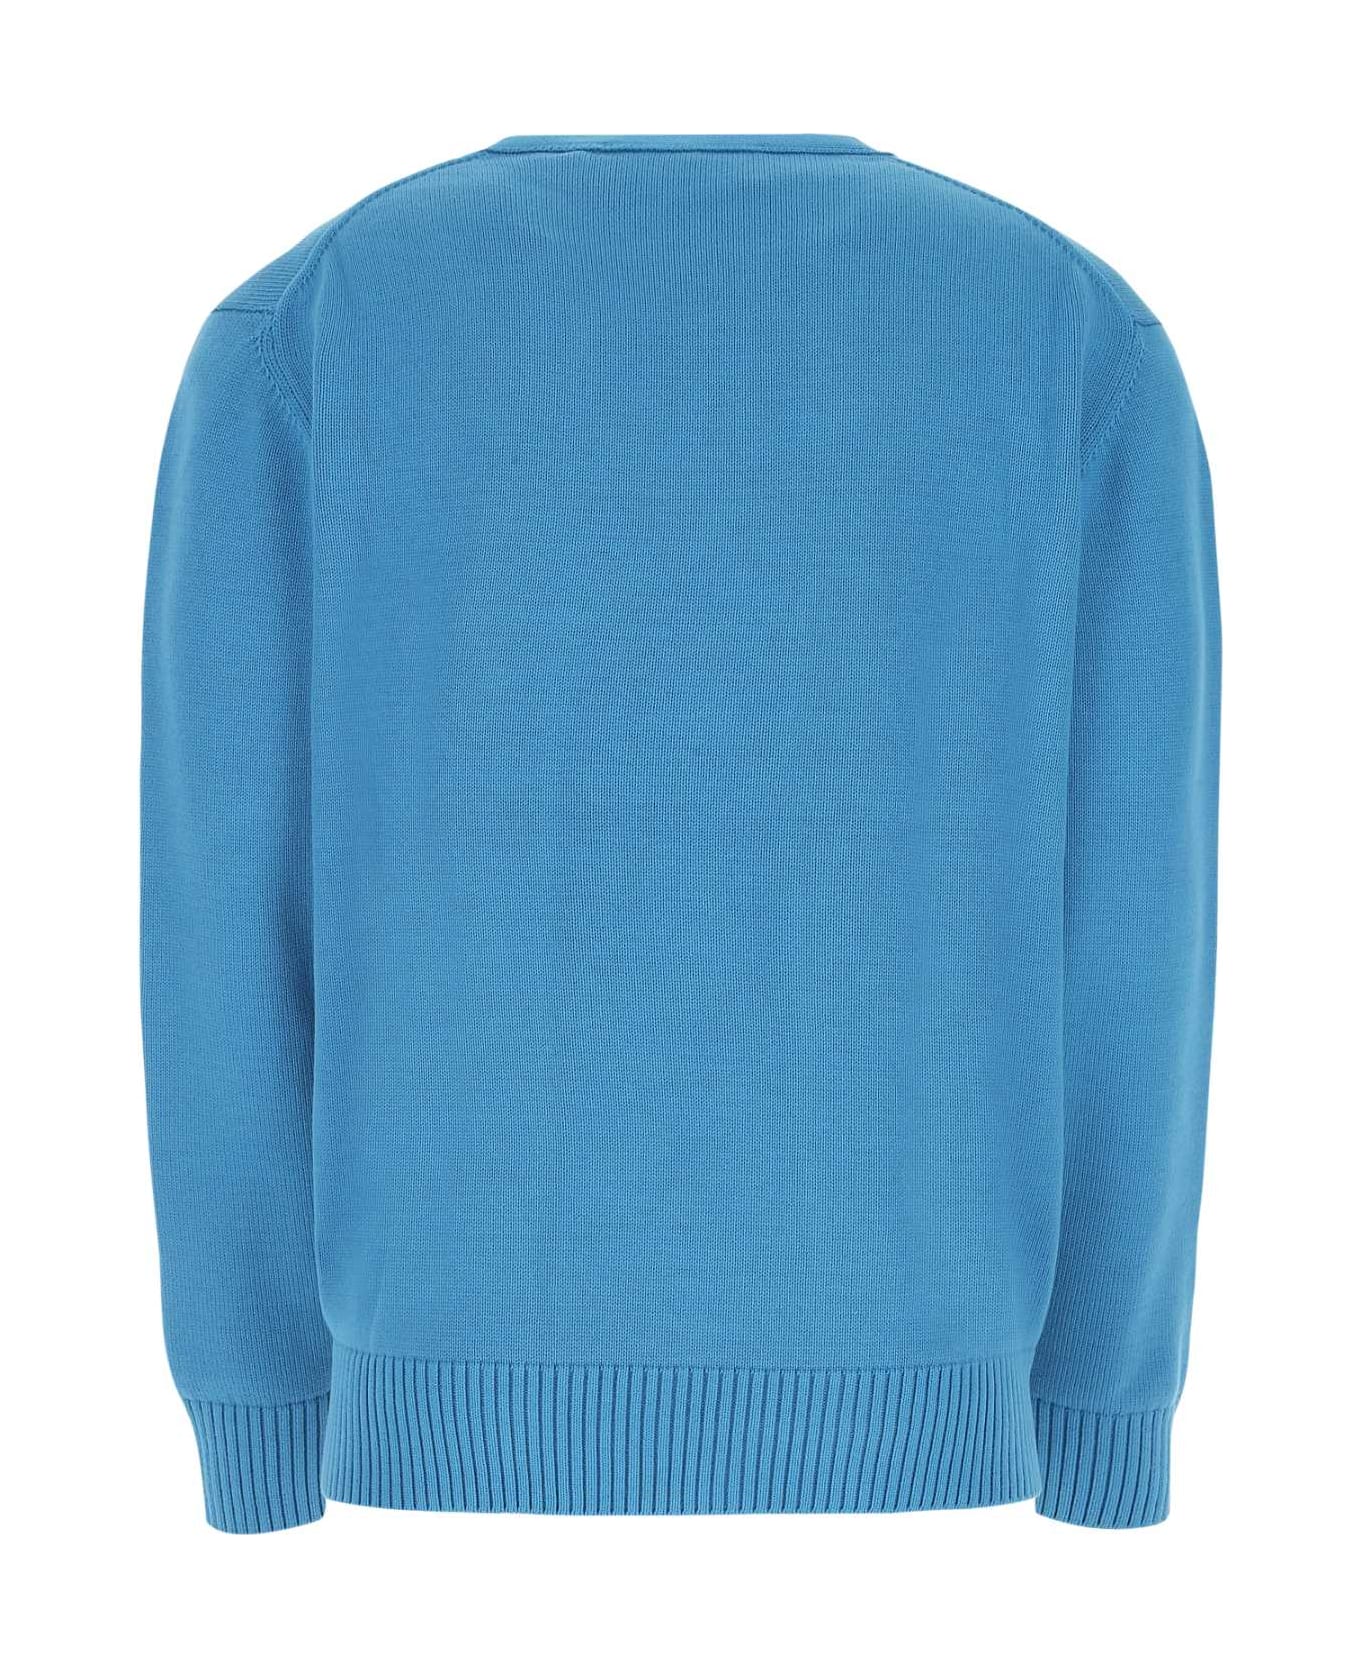 1017 ALYX 9SM Turquoise Cotton Sweater - BLU0001 ニットウェア